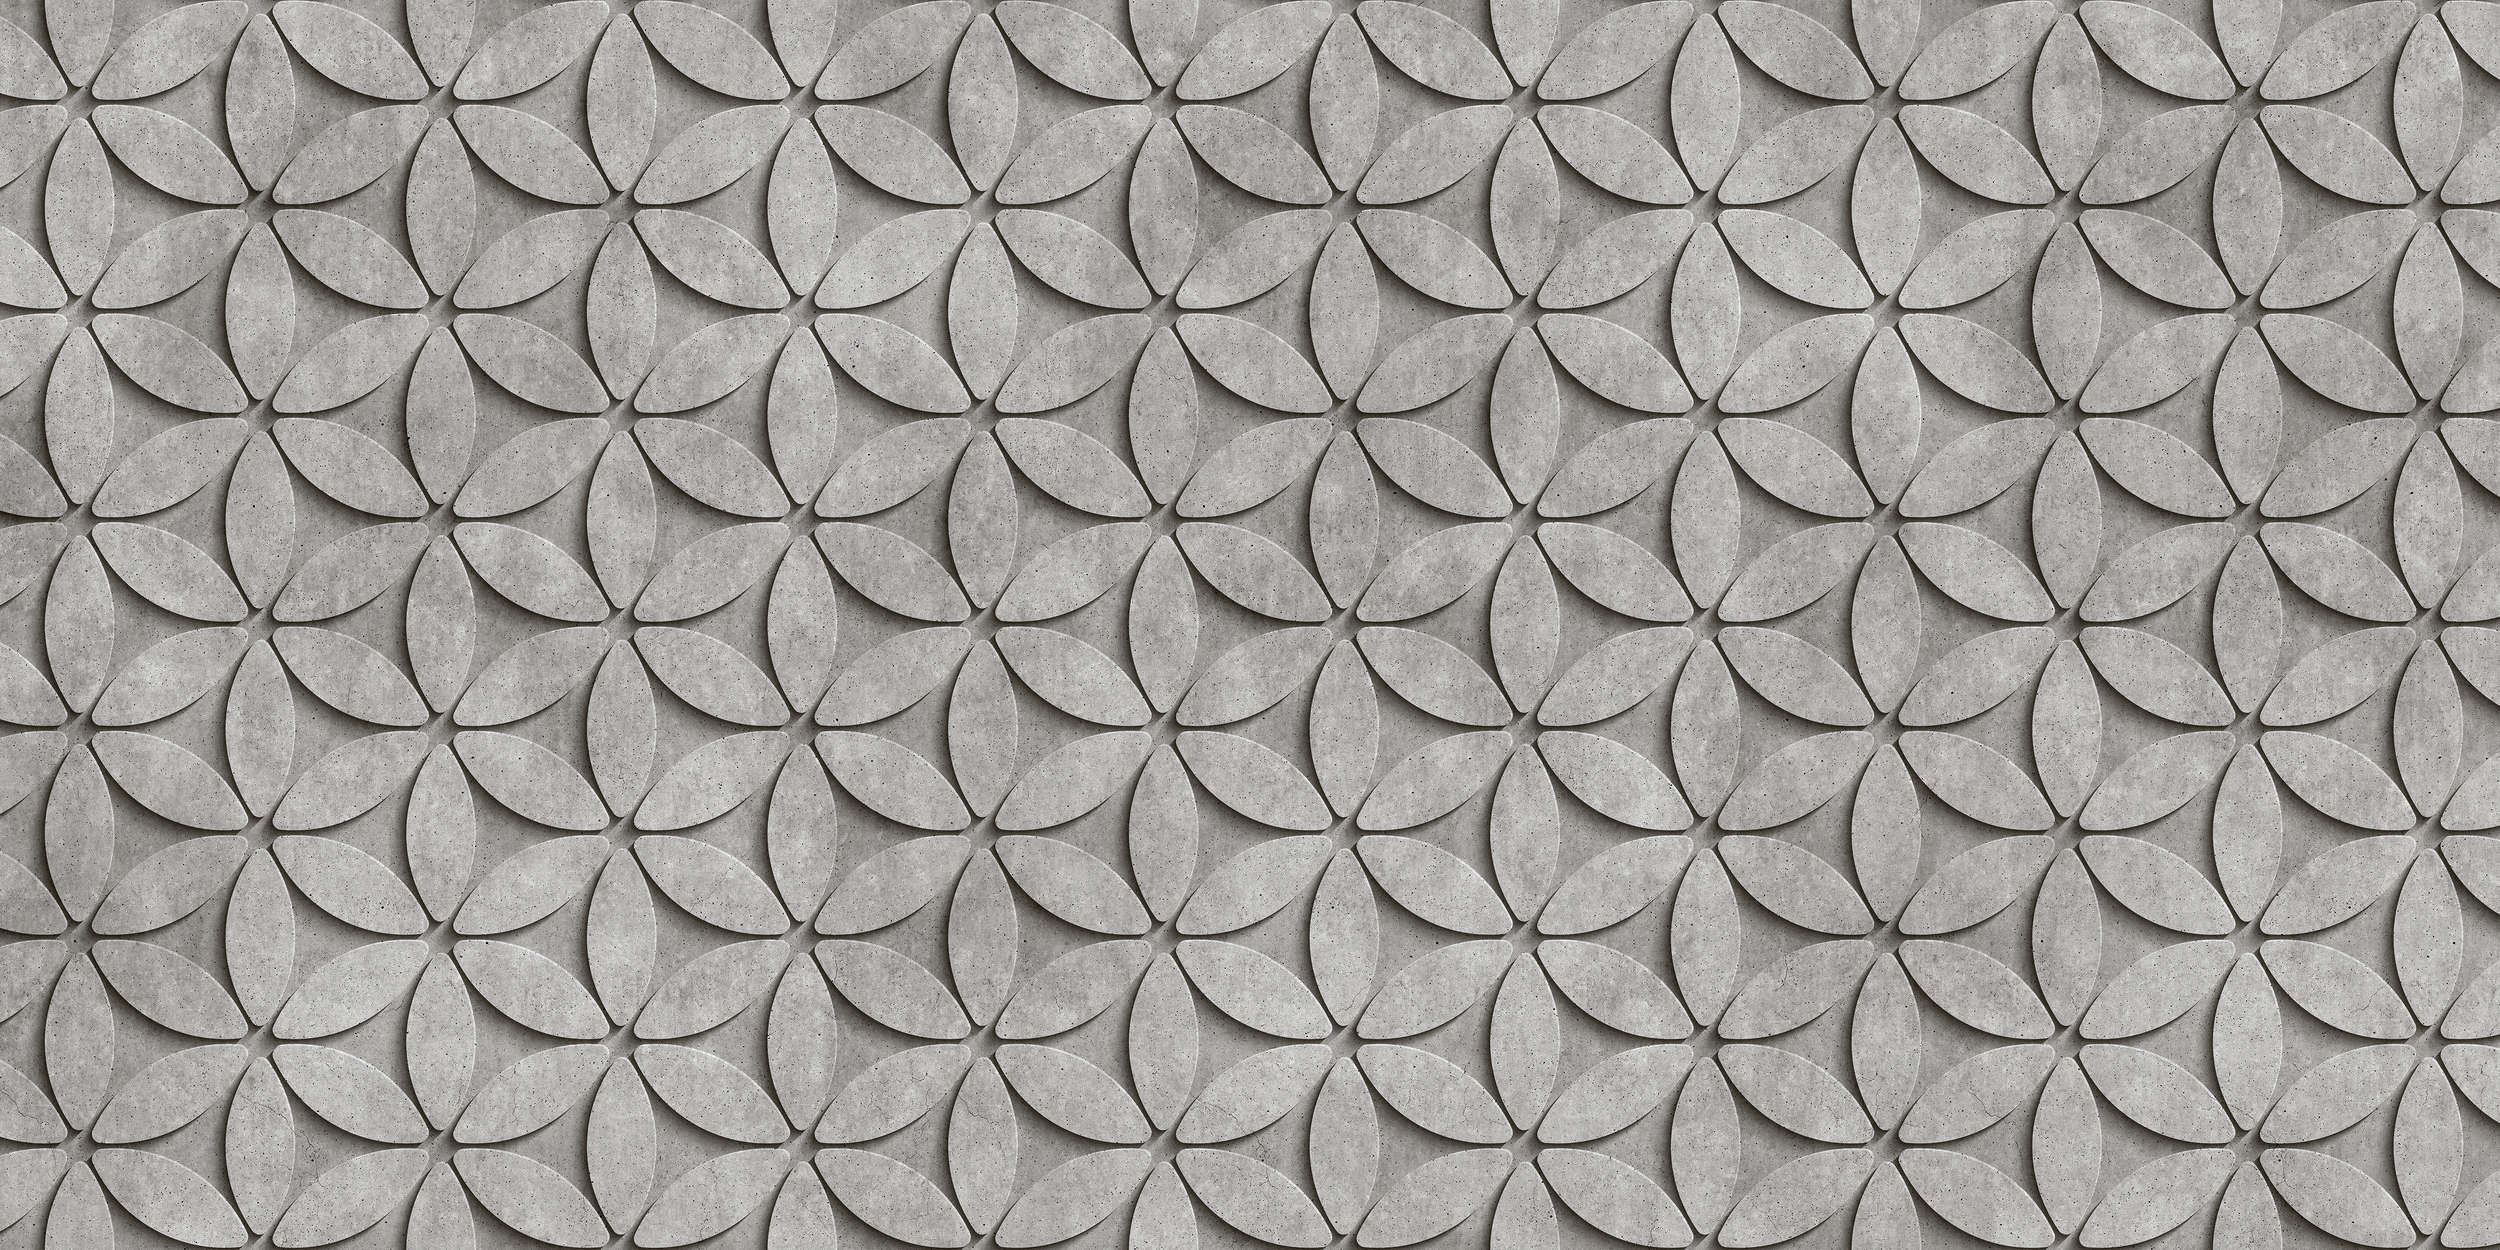             Tile 1 - Wallpaper in Cool 3D Concrete Polygons - Grey, Black | Pearl smooth fleece
        